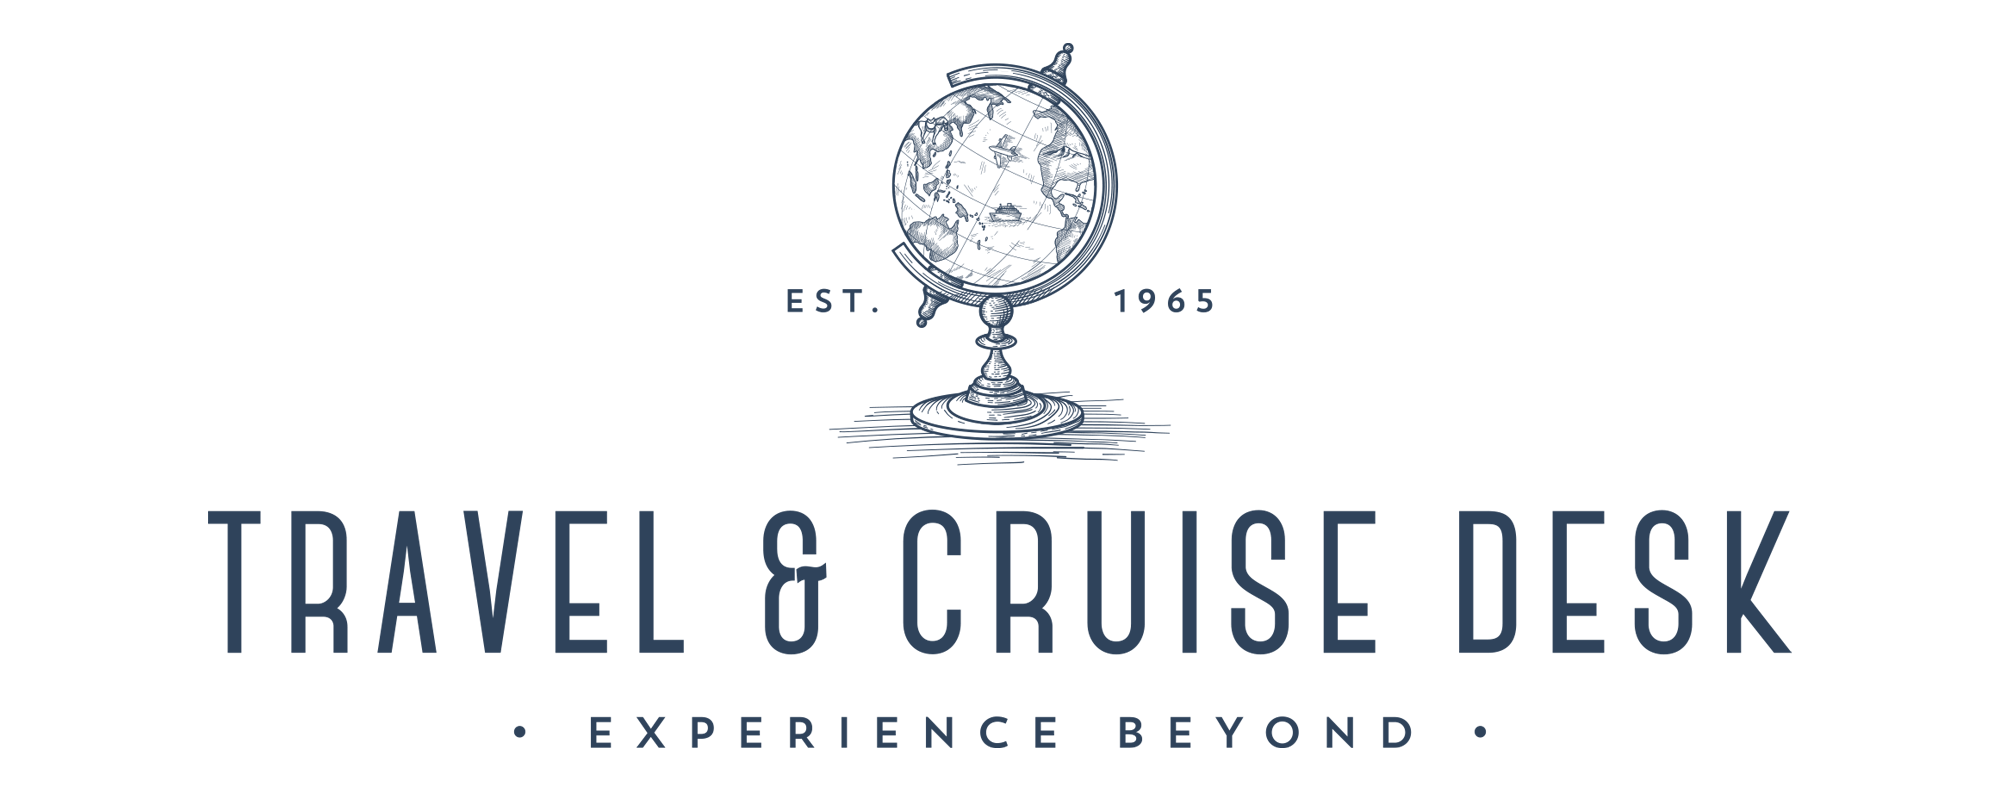 Travel & Cruise Desk